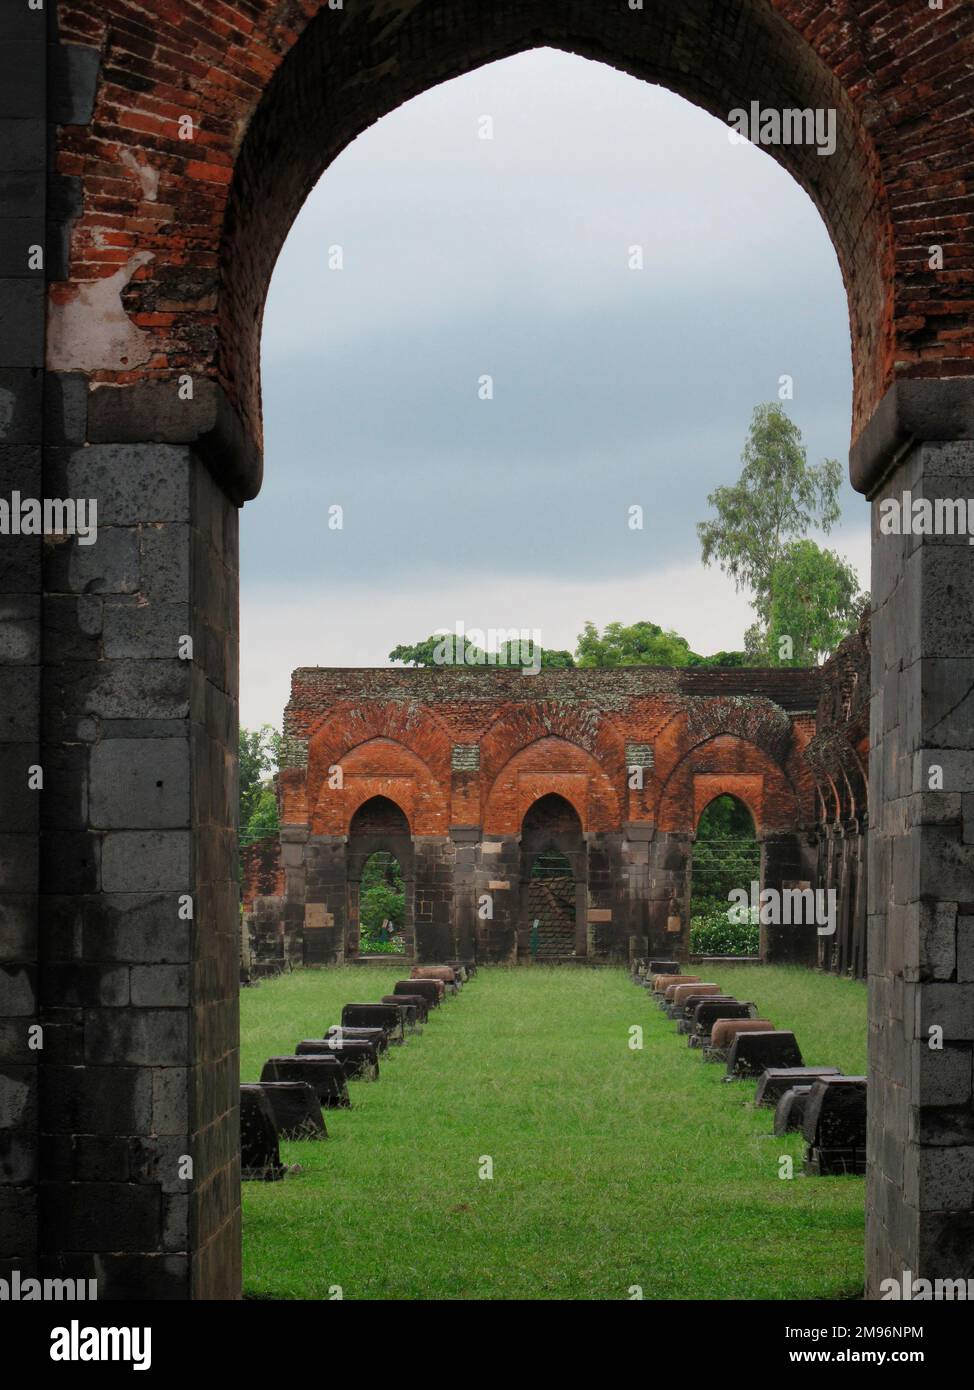 India, West Bengal, Pandua: Adina Mosque or Jami Masjid (1364 AD), view towards the inner court. Stock Photo